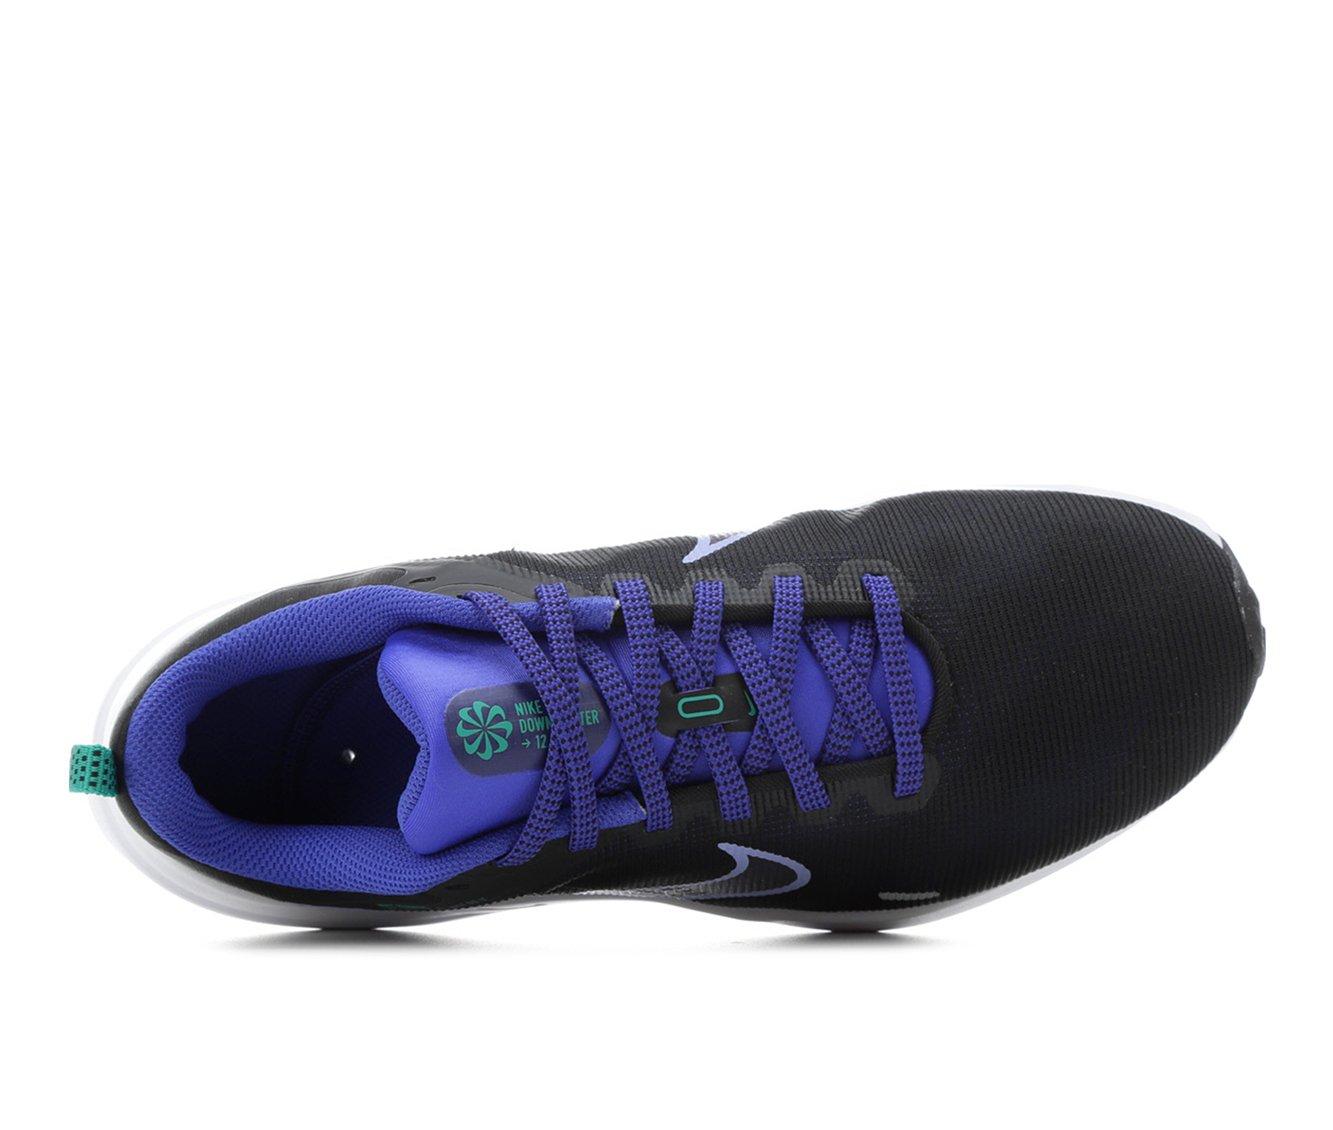 Nike Downshifter 12 Fille - Chaussures running femme Junior